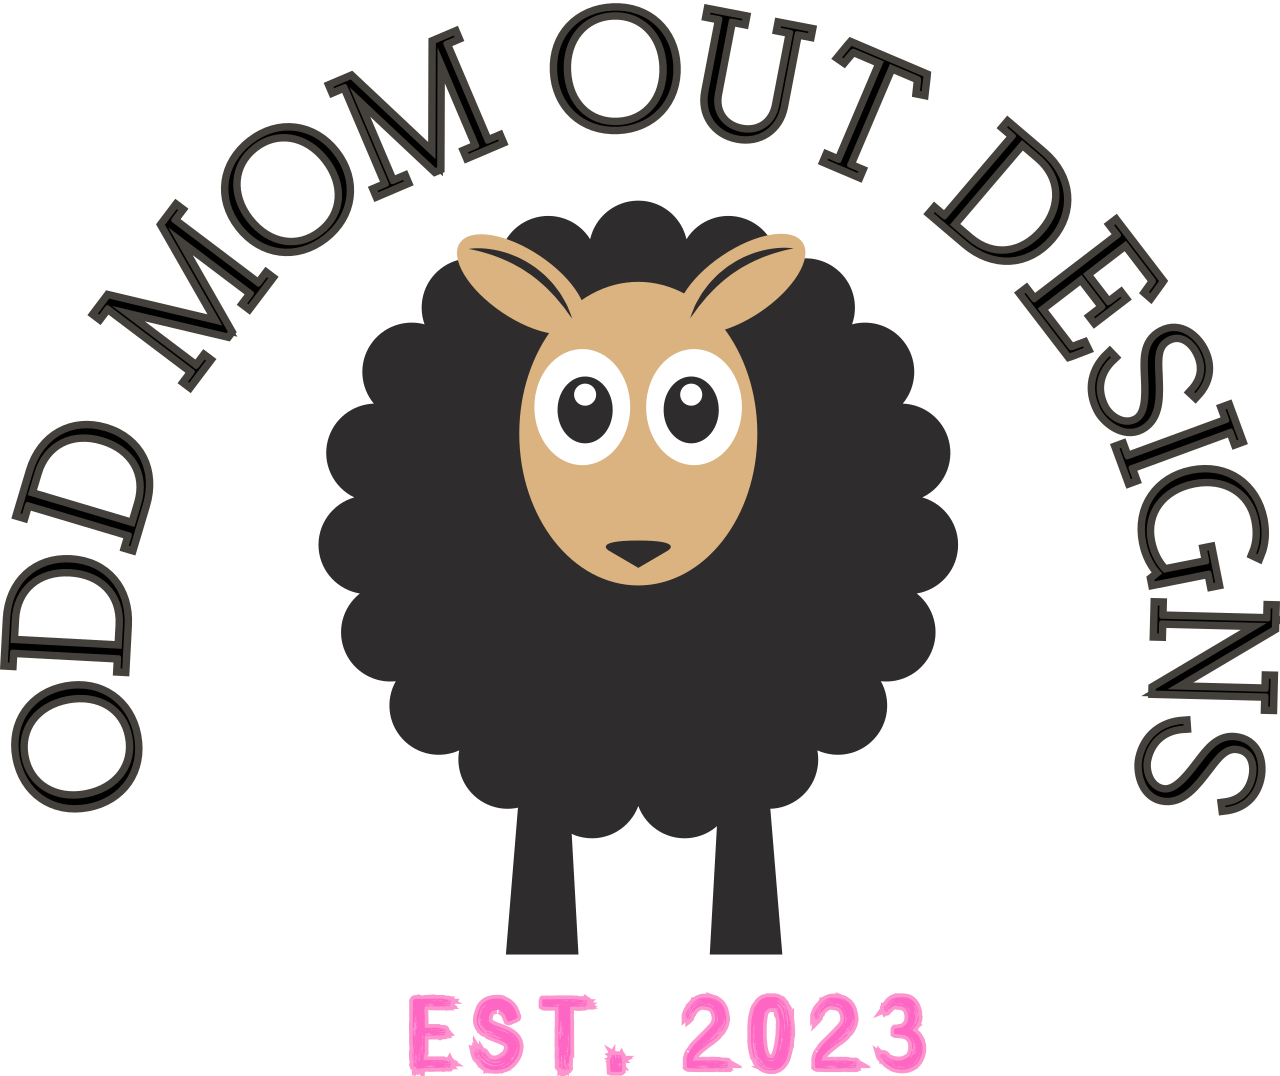 ODD MOM OUT DESIGNS's logo